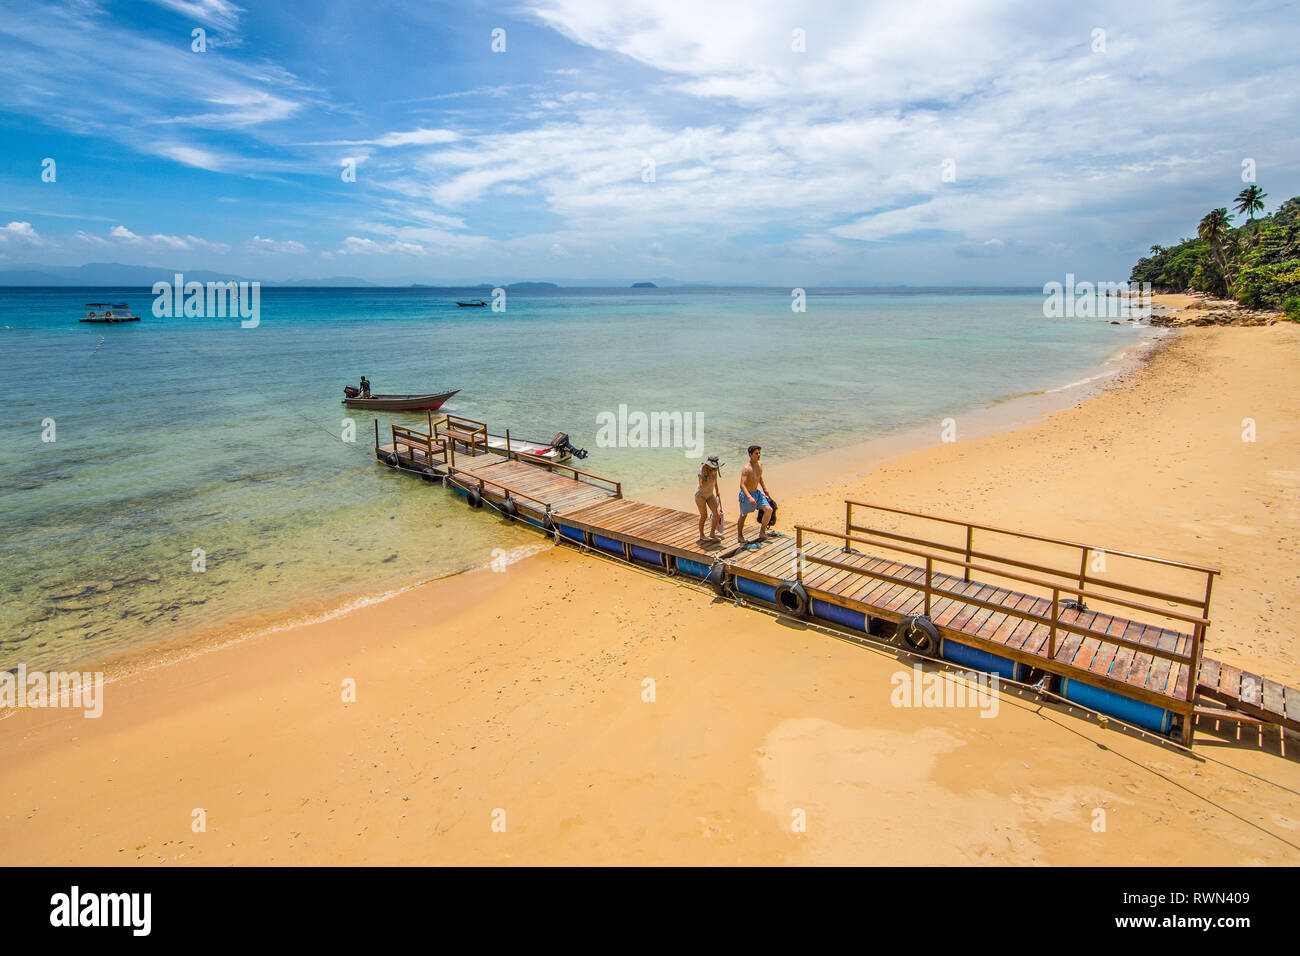 A couple arrive on a golden sand beach of a paradise island along a jetty. Stock Photo